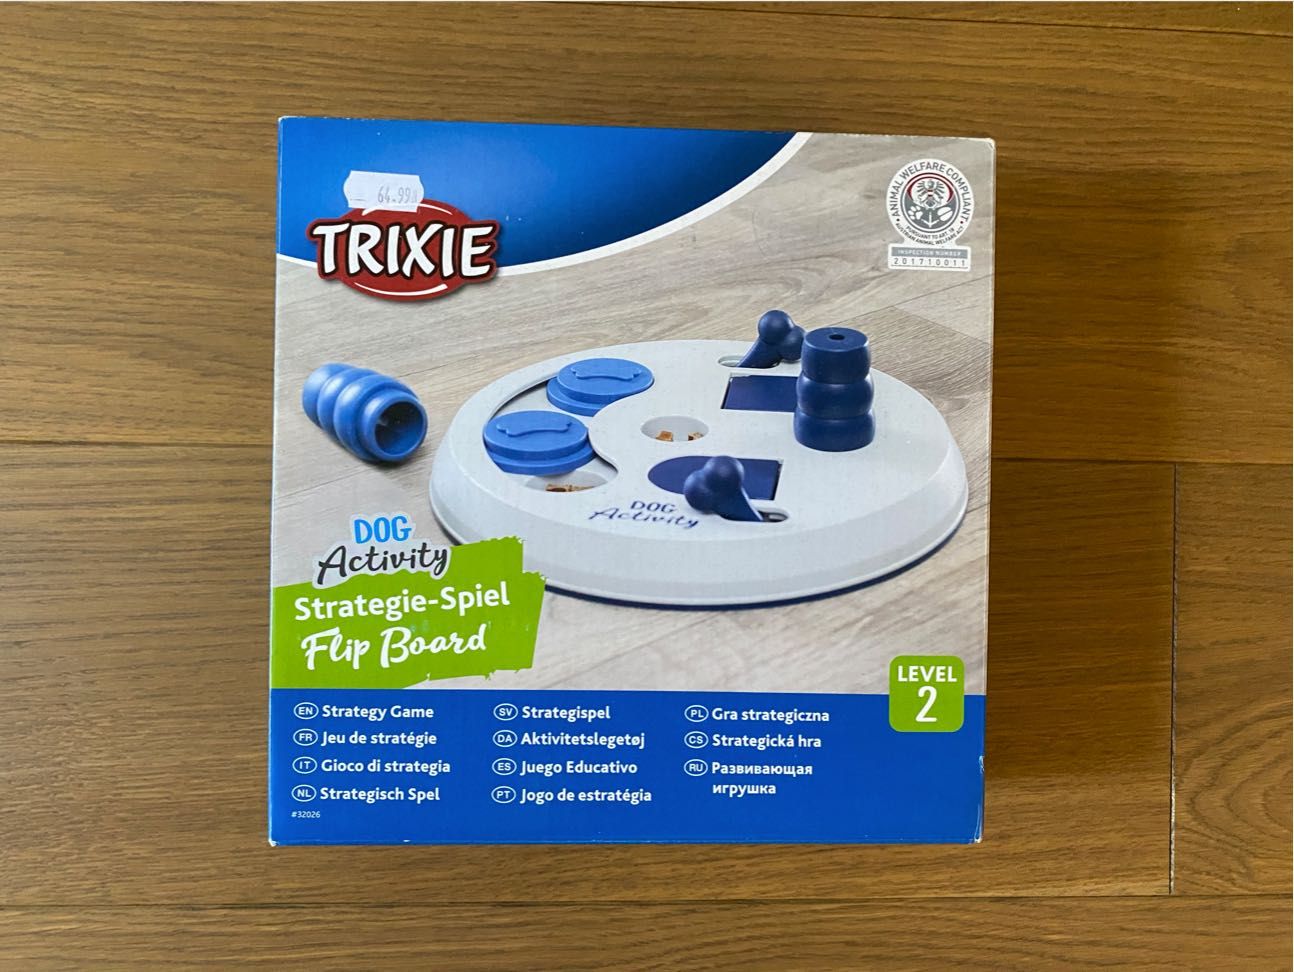 Trixie Flip Board Dog Activity Level 2